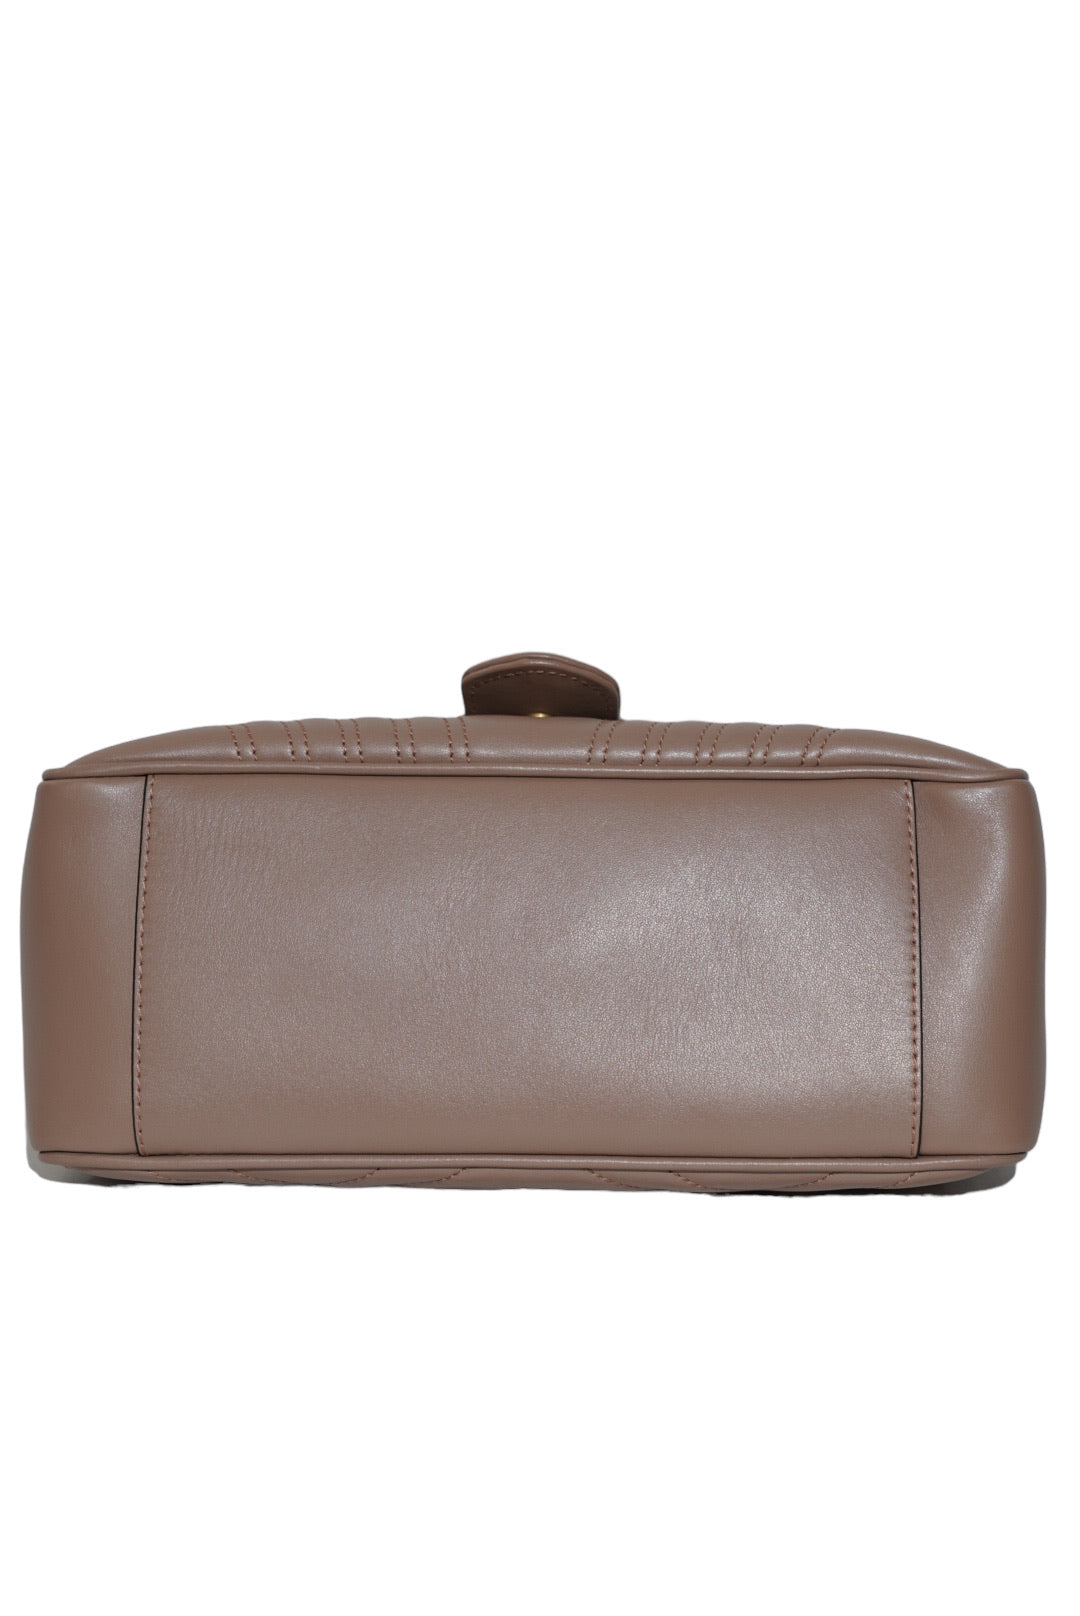 GUCCI - GG Marmont Top Handle Bag